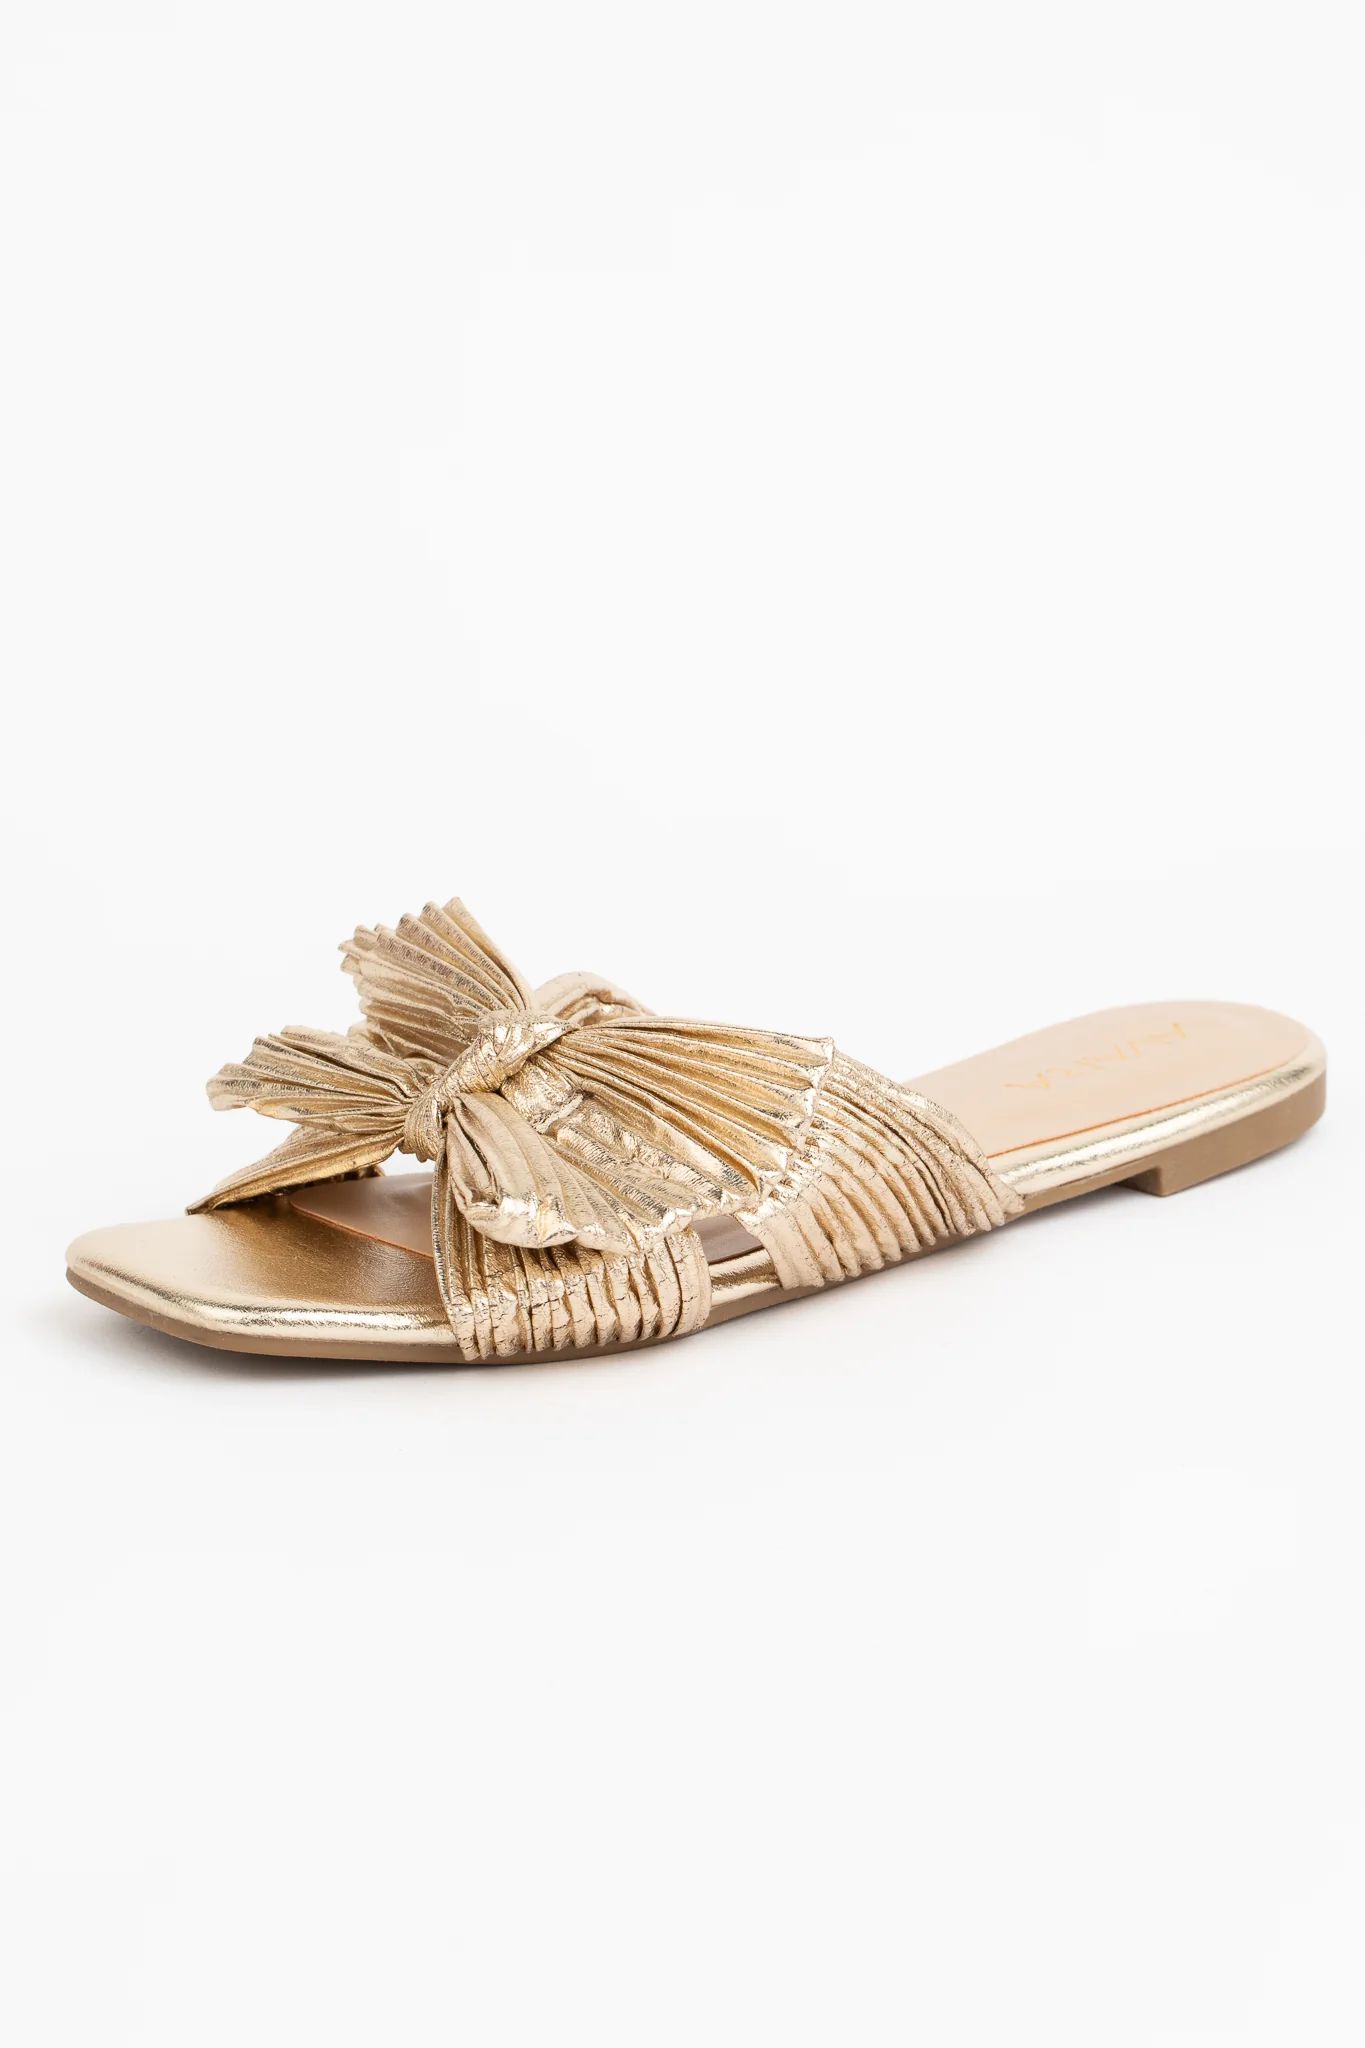 Ariel Sandal- Gold Bow Slip On Sandals | Avara